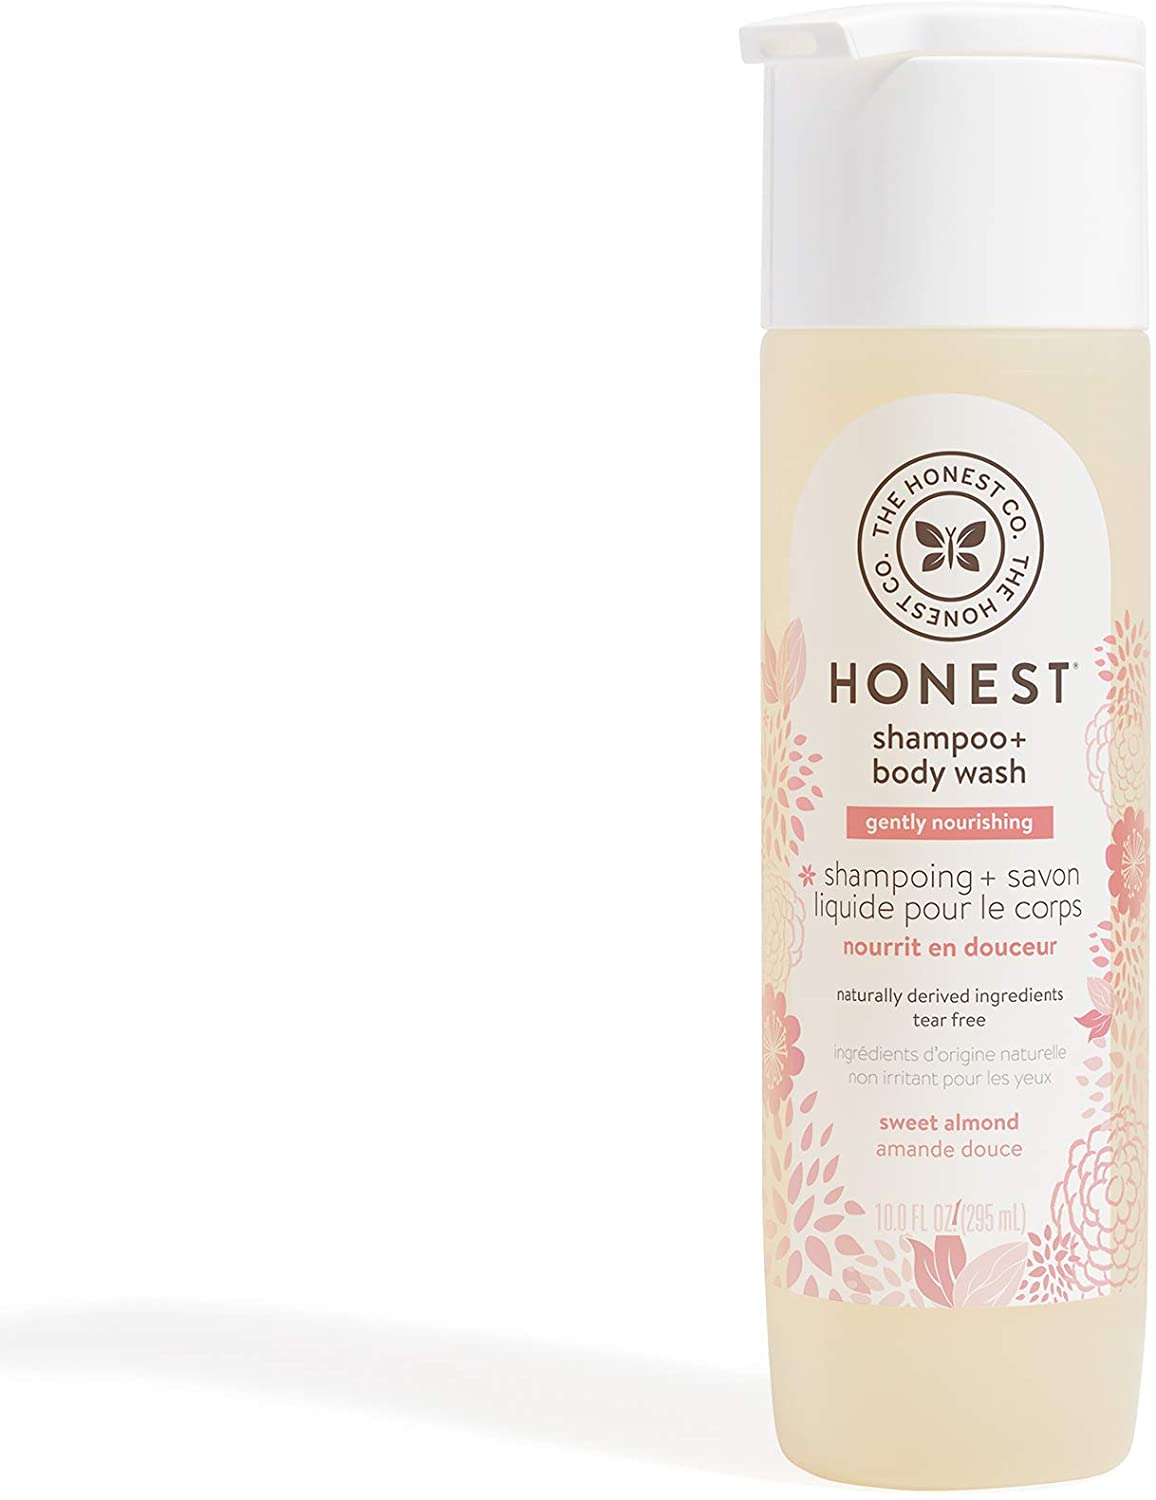 10 oz.The Honest Company Gently Nourishing Shampoo & Body Wash (Sweet Almond) $5.53 at Amazon